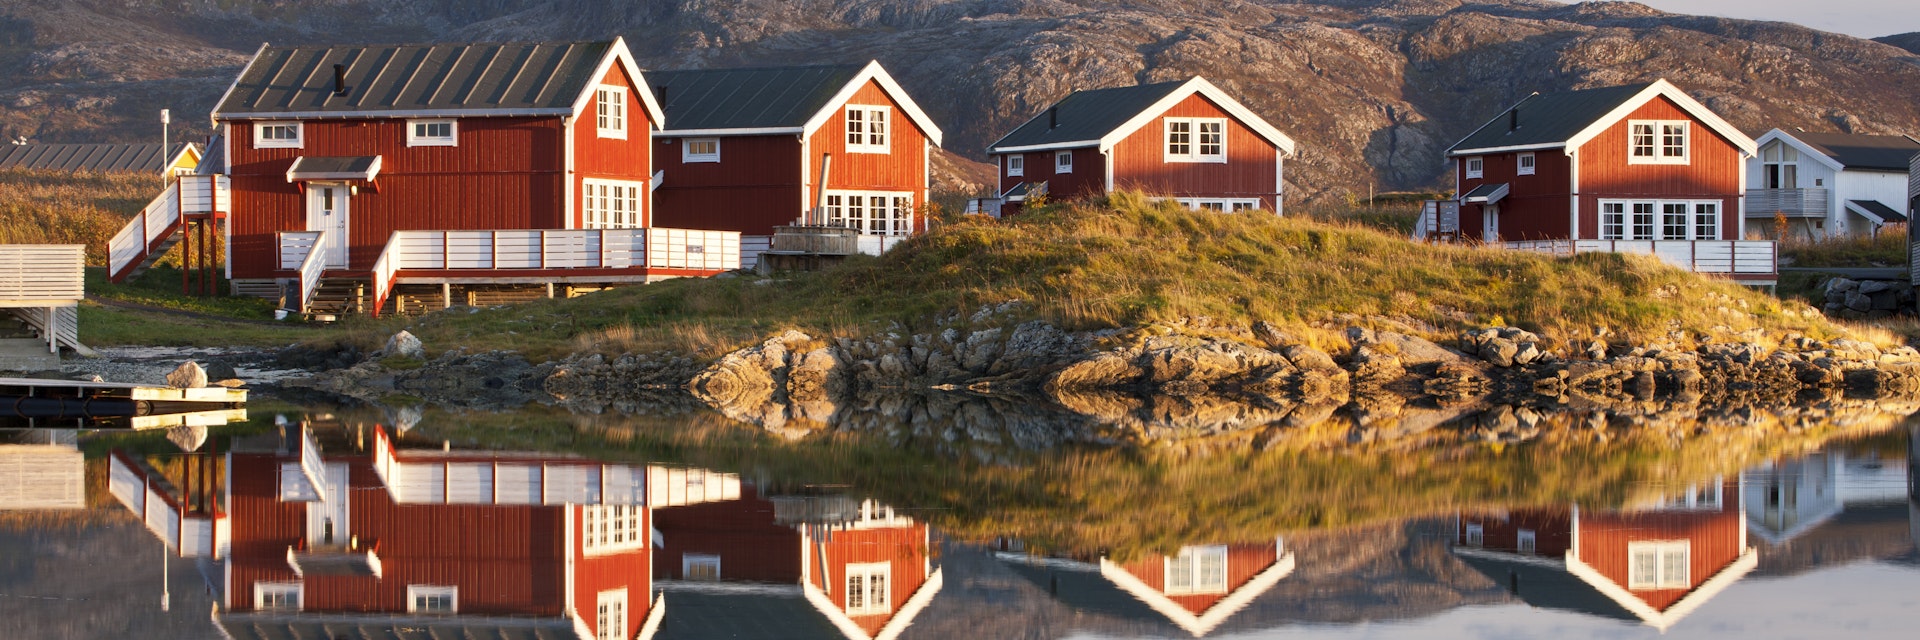 Cabins at Sommaroy, Tromso, Norway